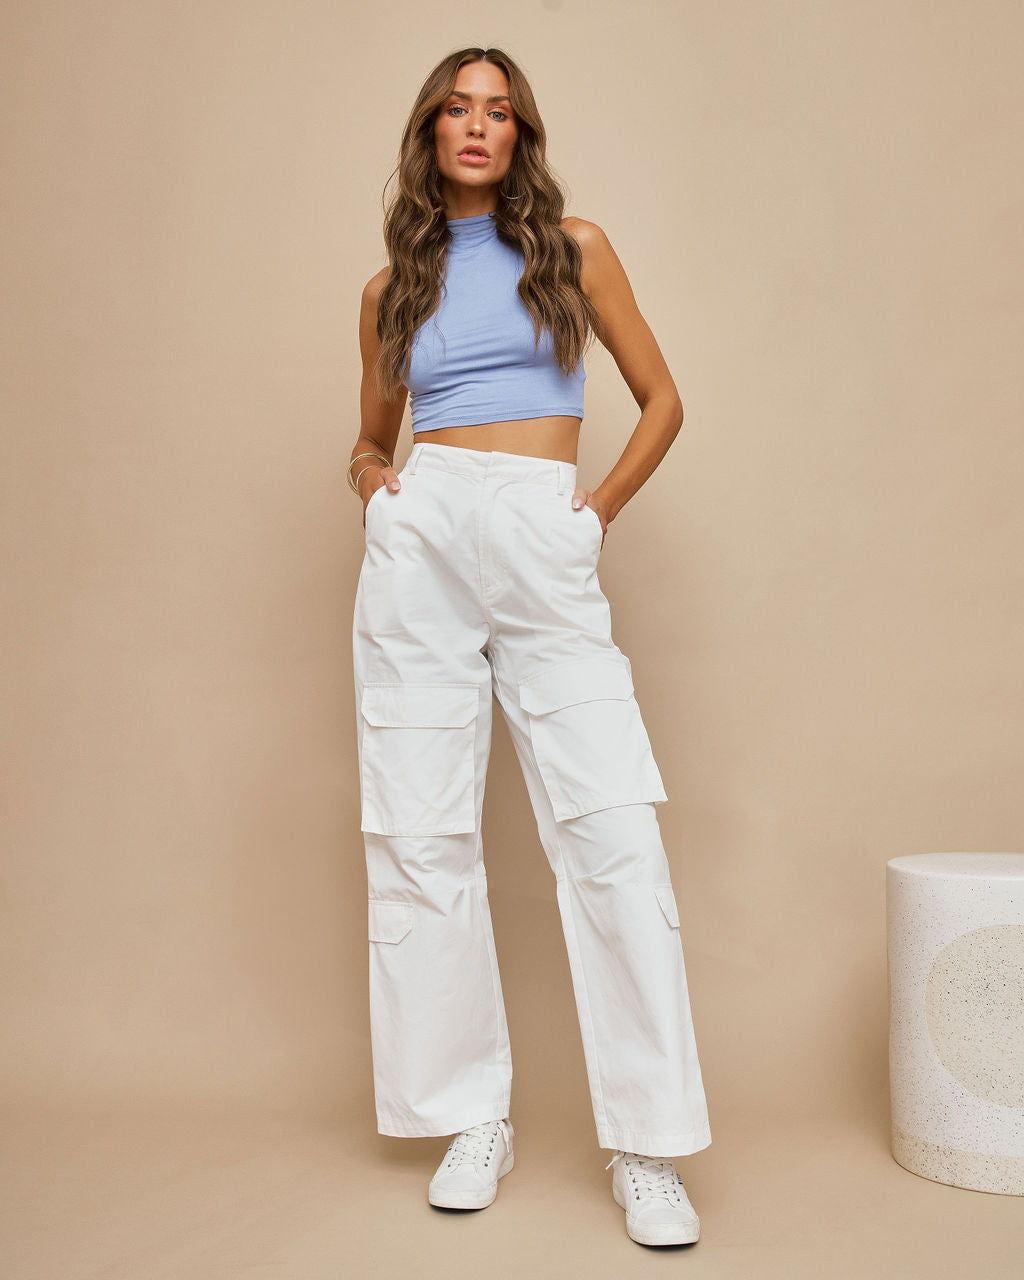 White Cotton Tissue Pants for Women-DP001W – www.soosi.co.in